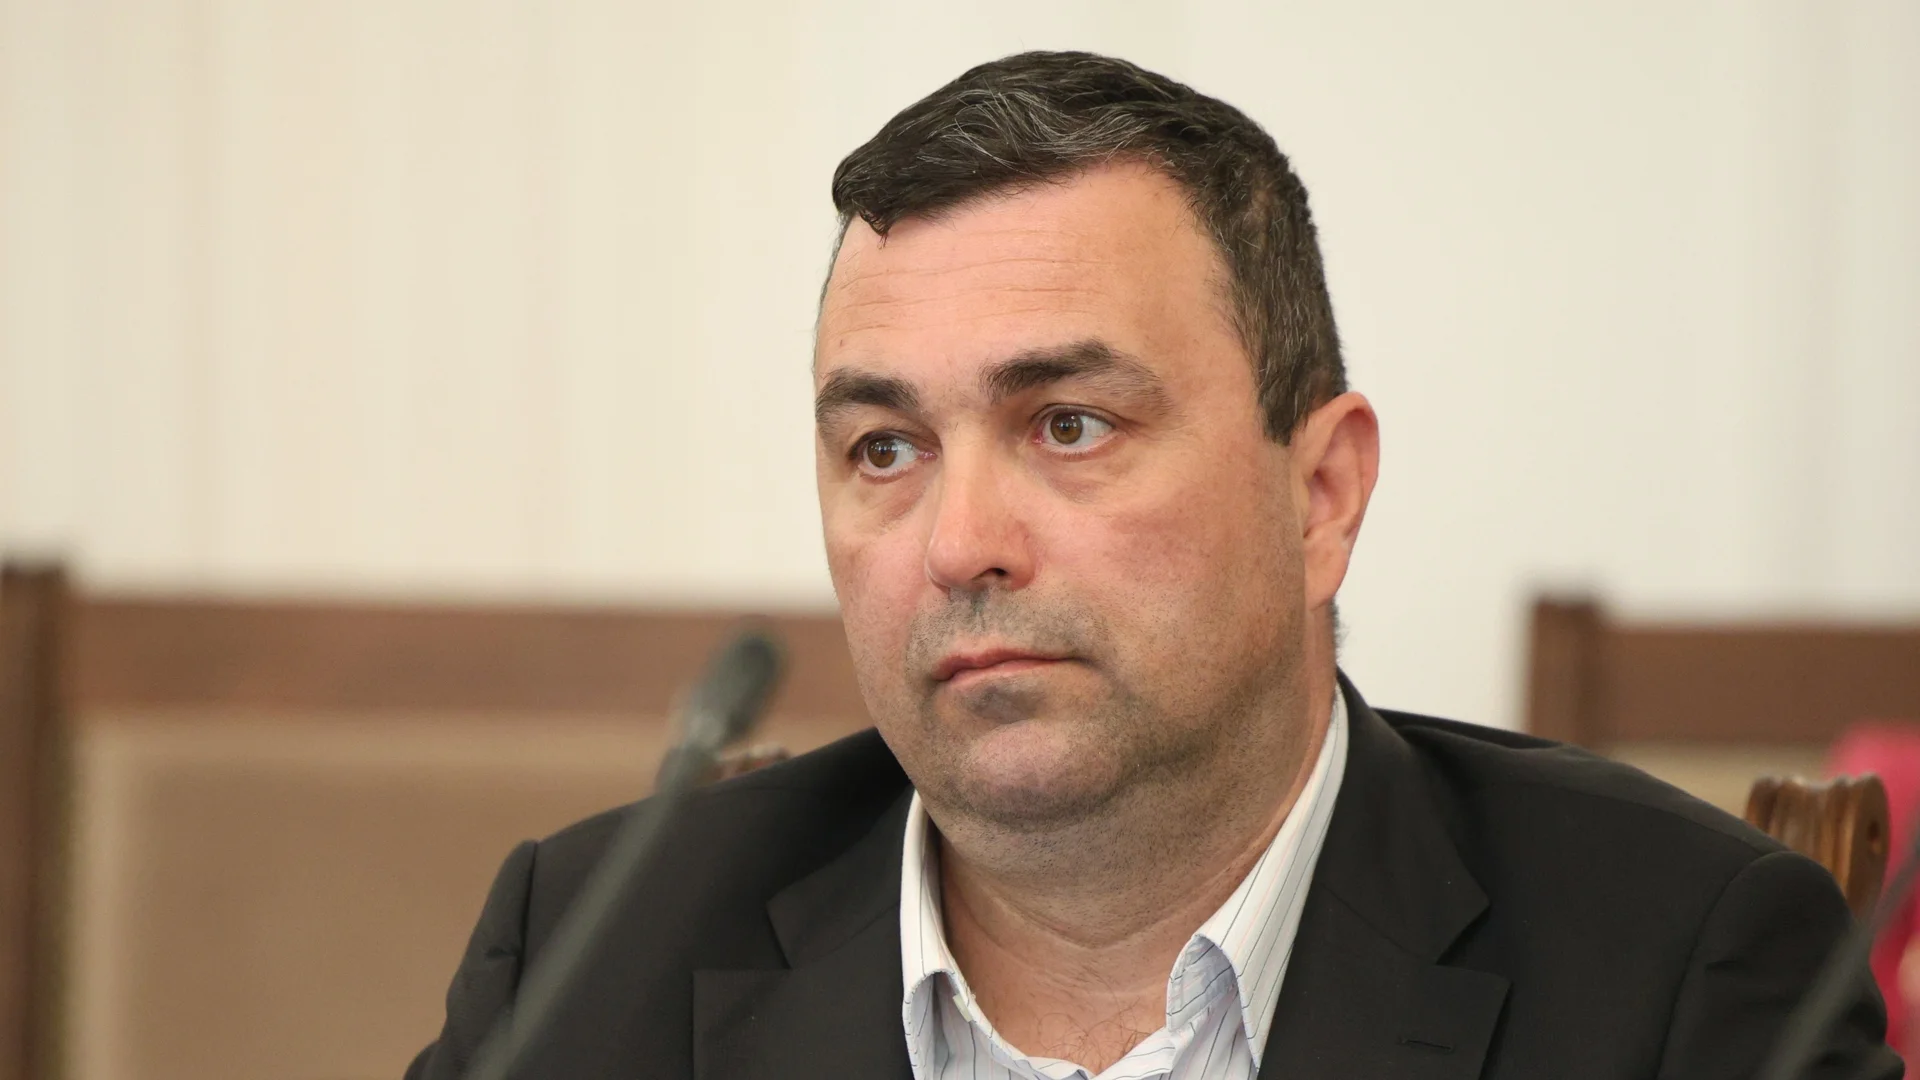 Поради липса на престъпление: Прекратиха делото срещу прокурор Сулев